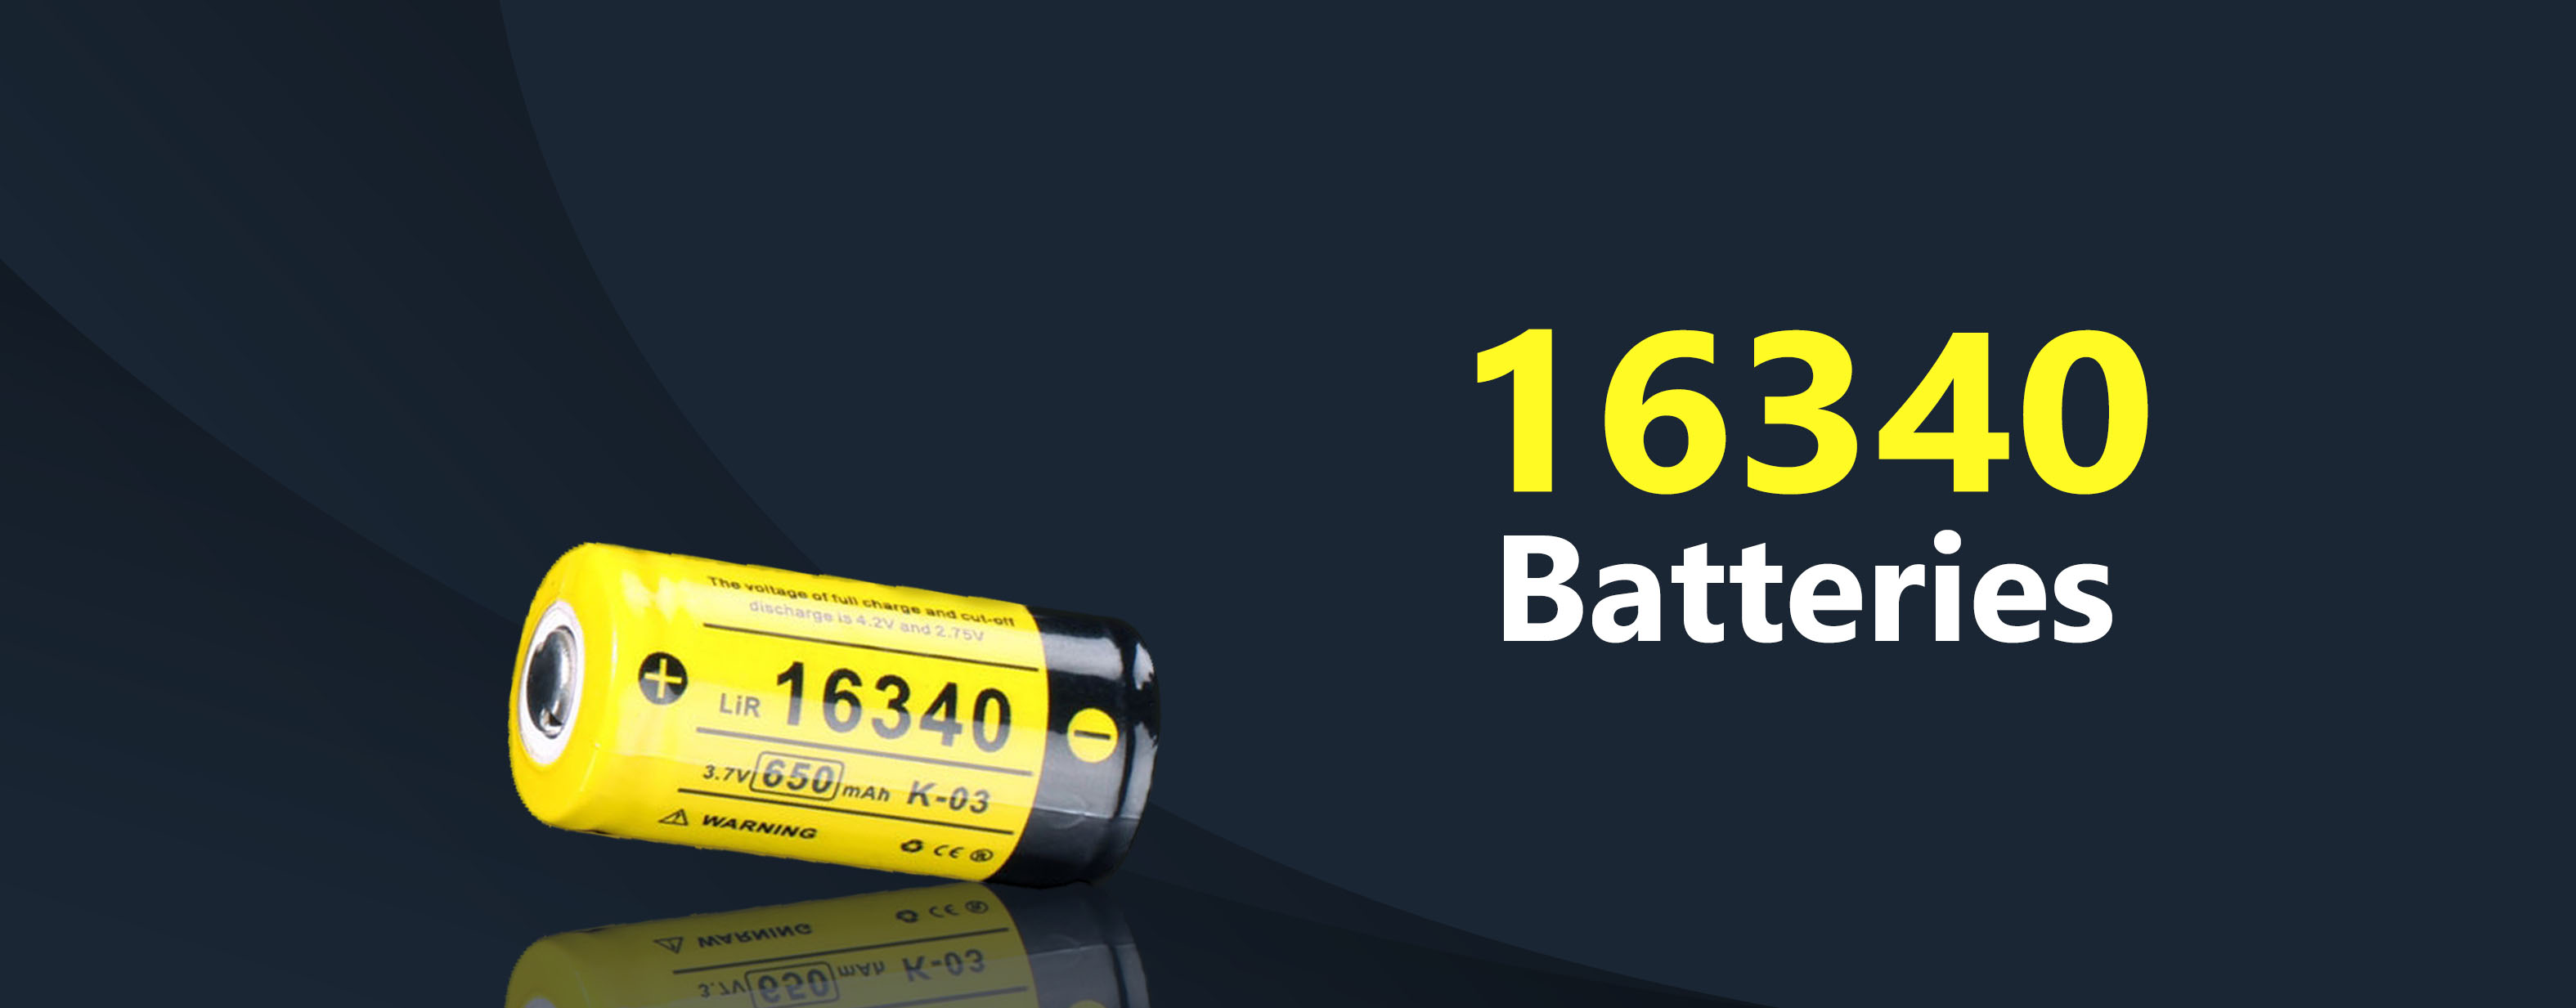 16340 Batteries